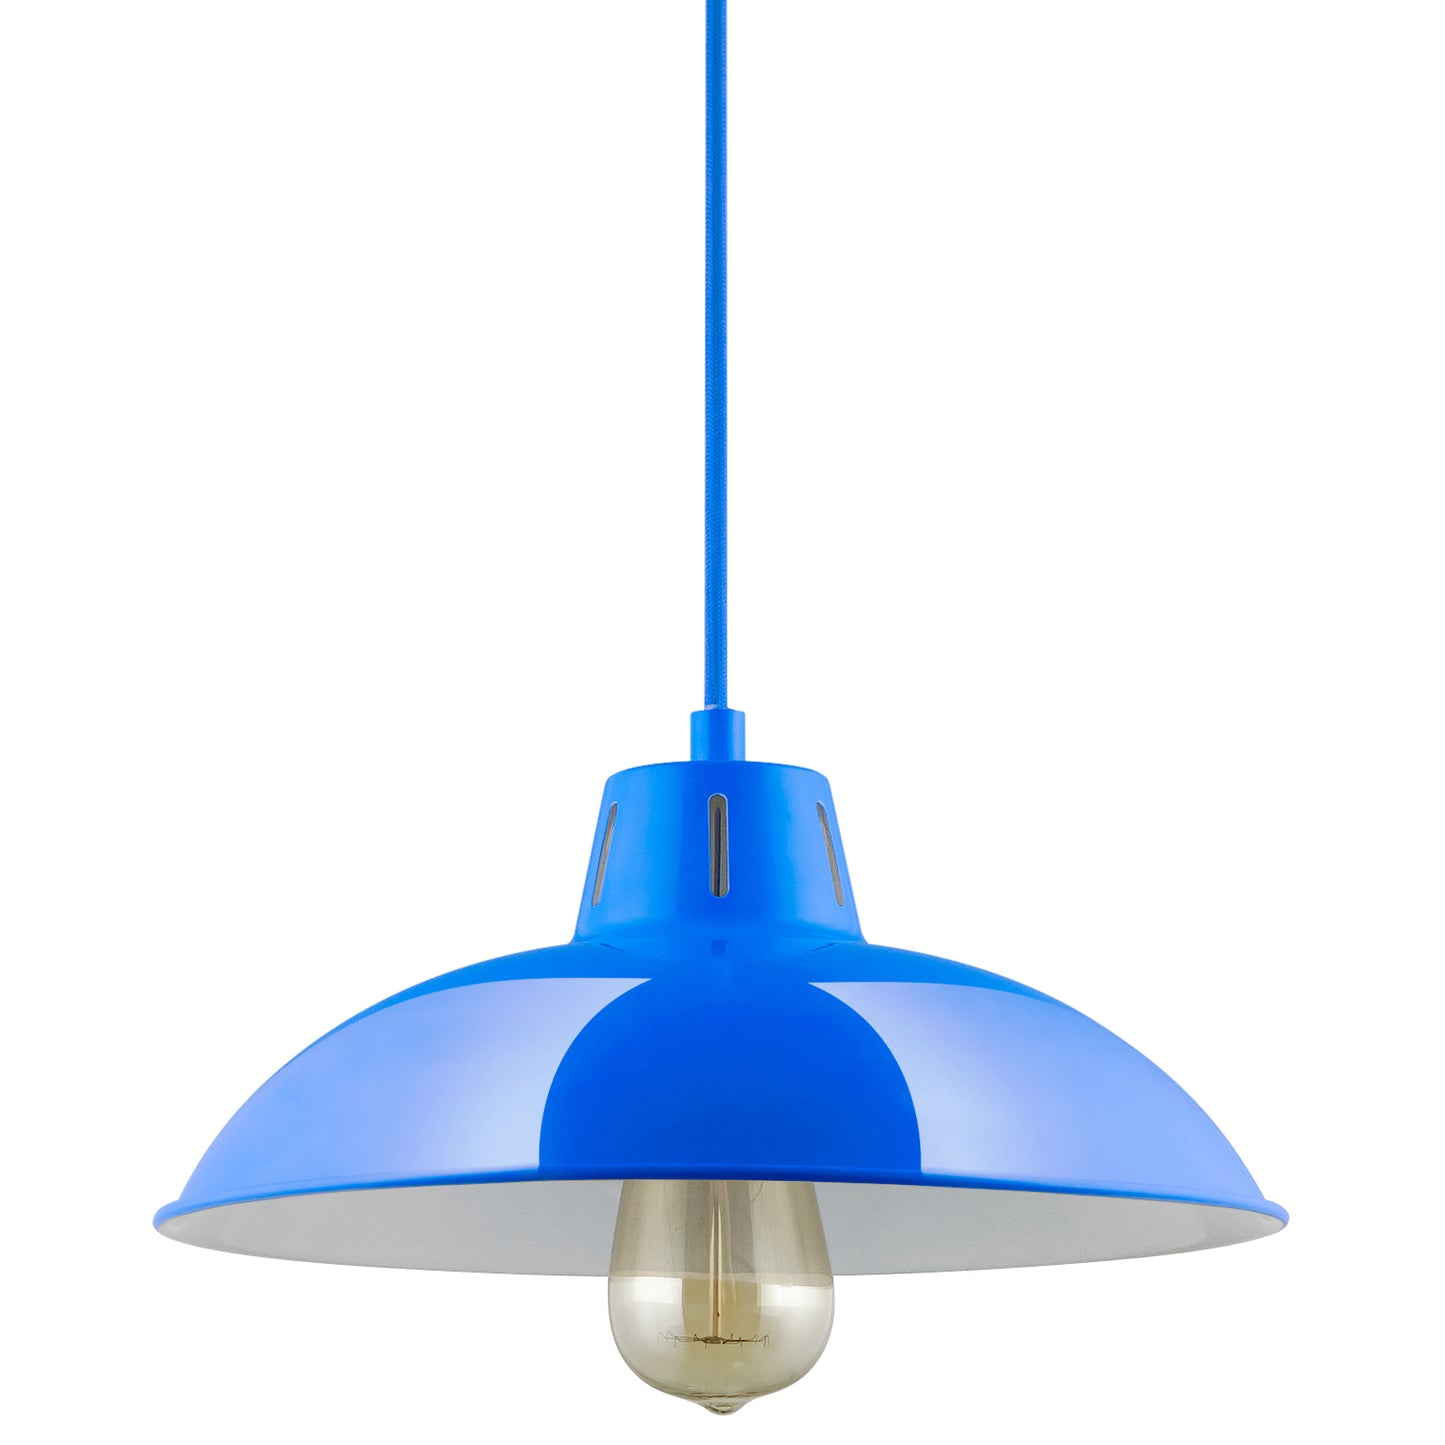 Sunlite - Vega Ceiling Pendant Light Fixture, Blue Finish